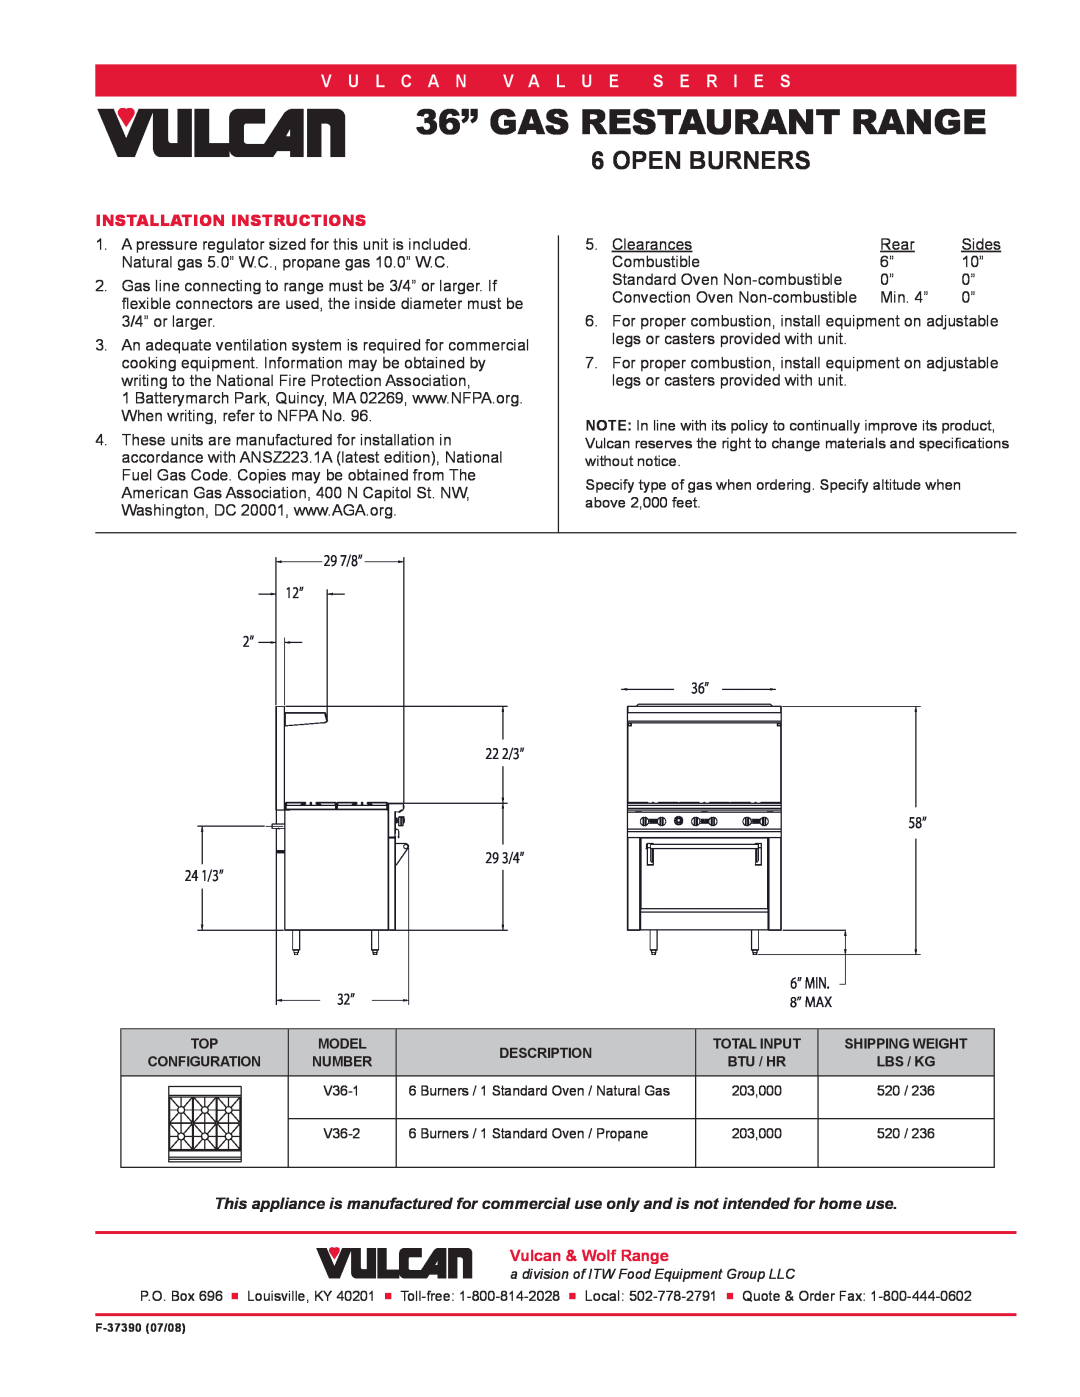 Vulcan-Hart V36-2 Installation Instructions, 36” GAS RESTAURANT RANGE, Open Burners, V U L C A N V A L U E S E R I E S 